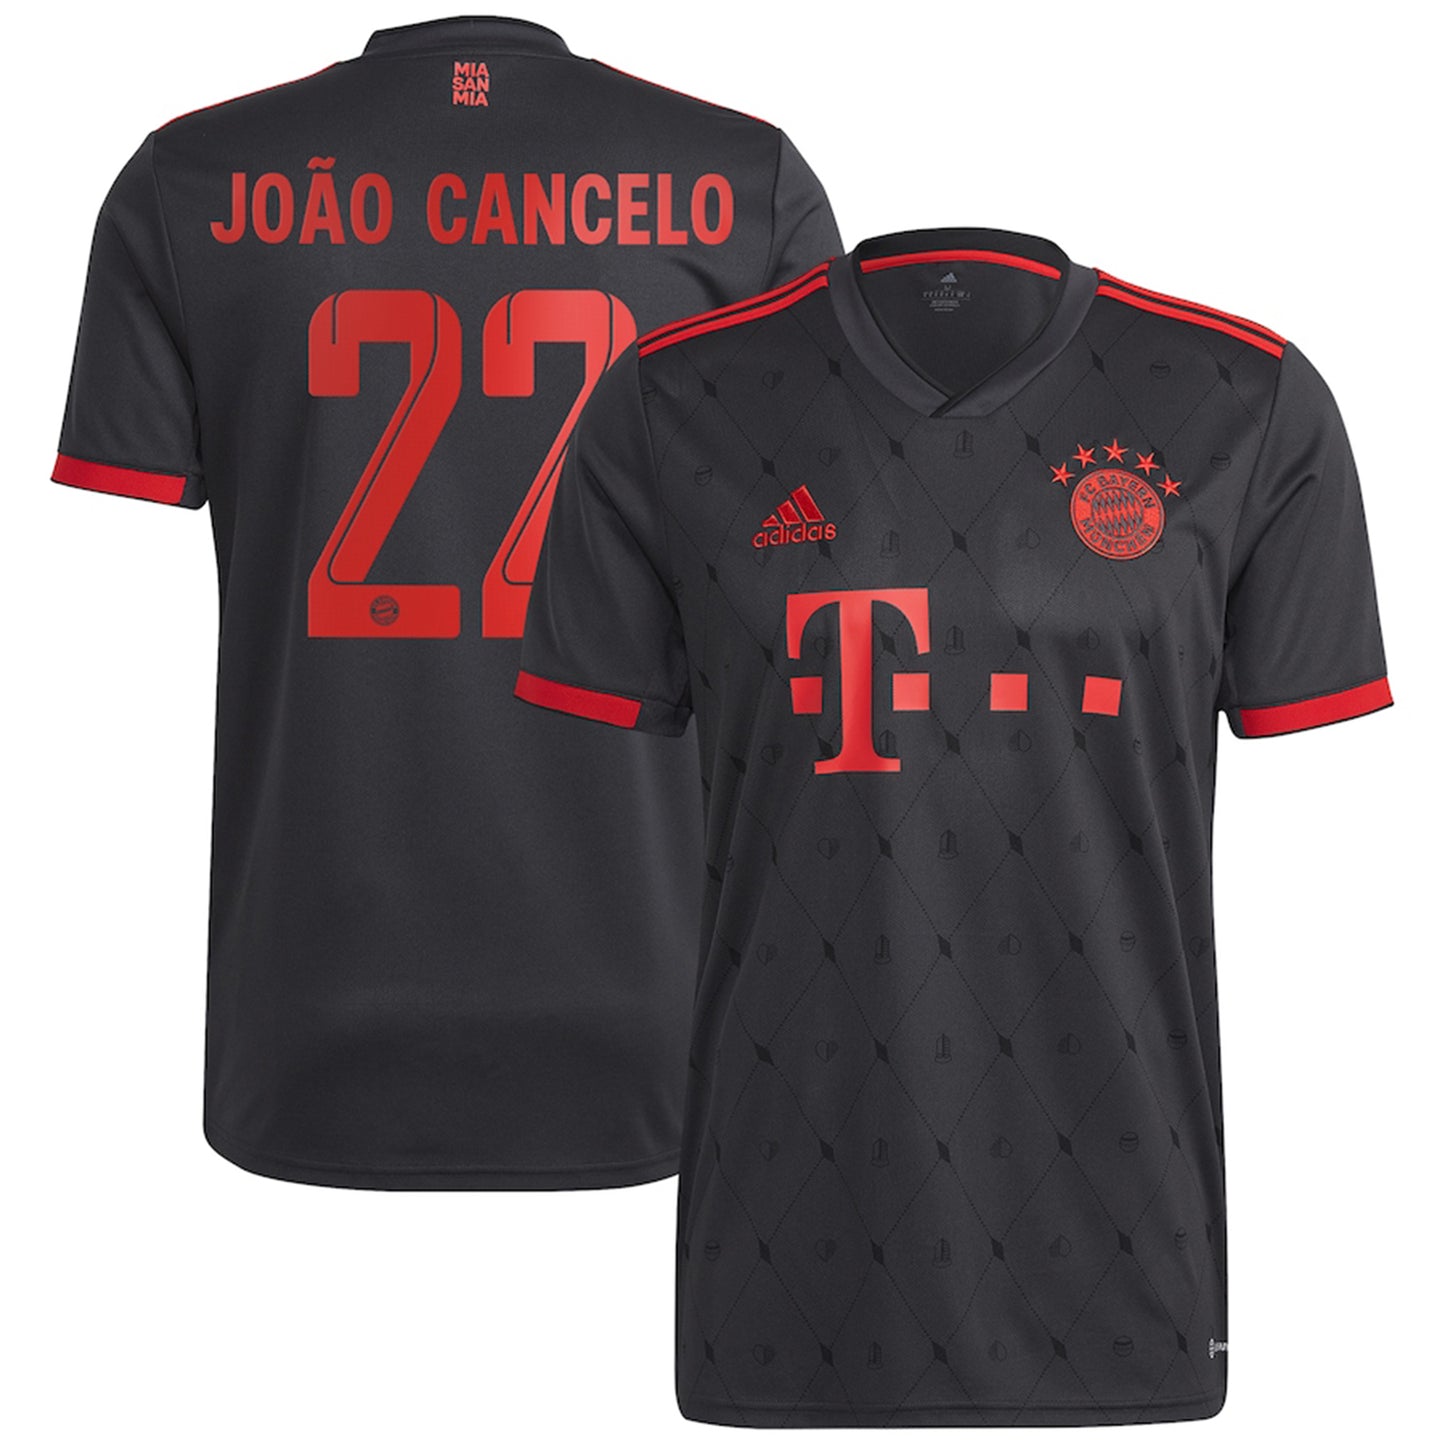 João Cancelo Bayern Munich 22 Jersey